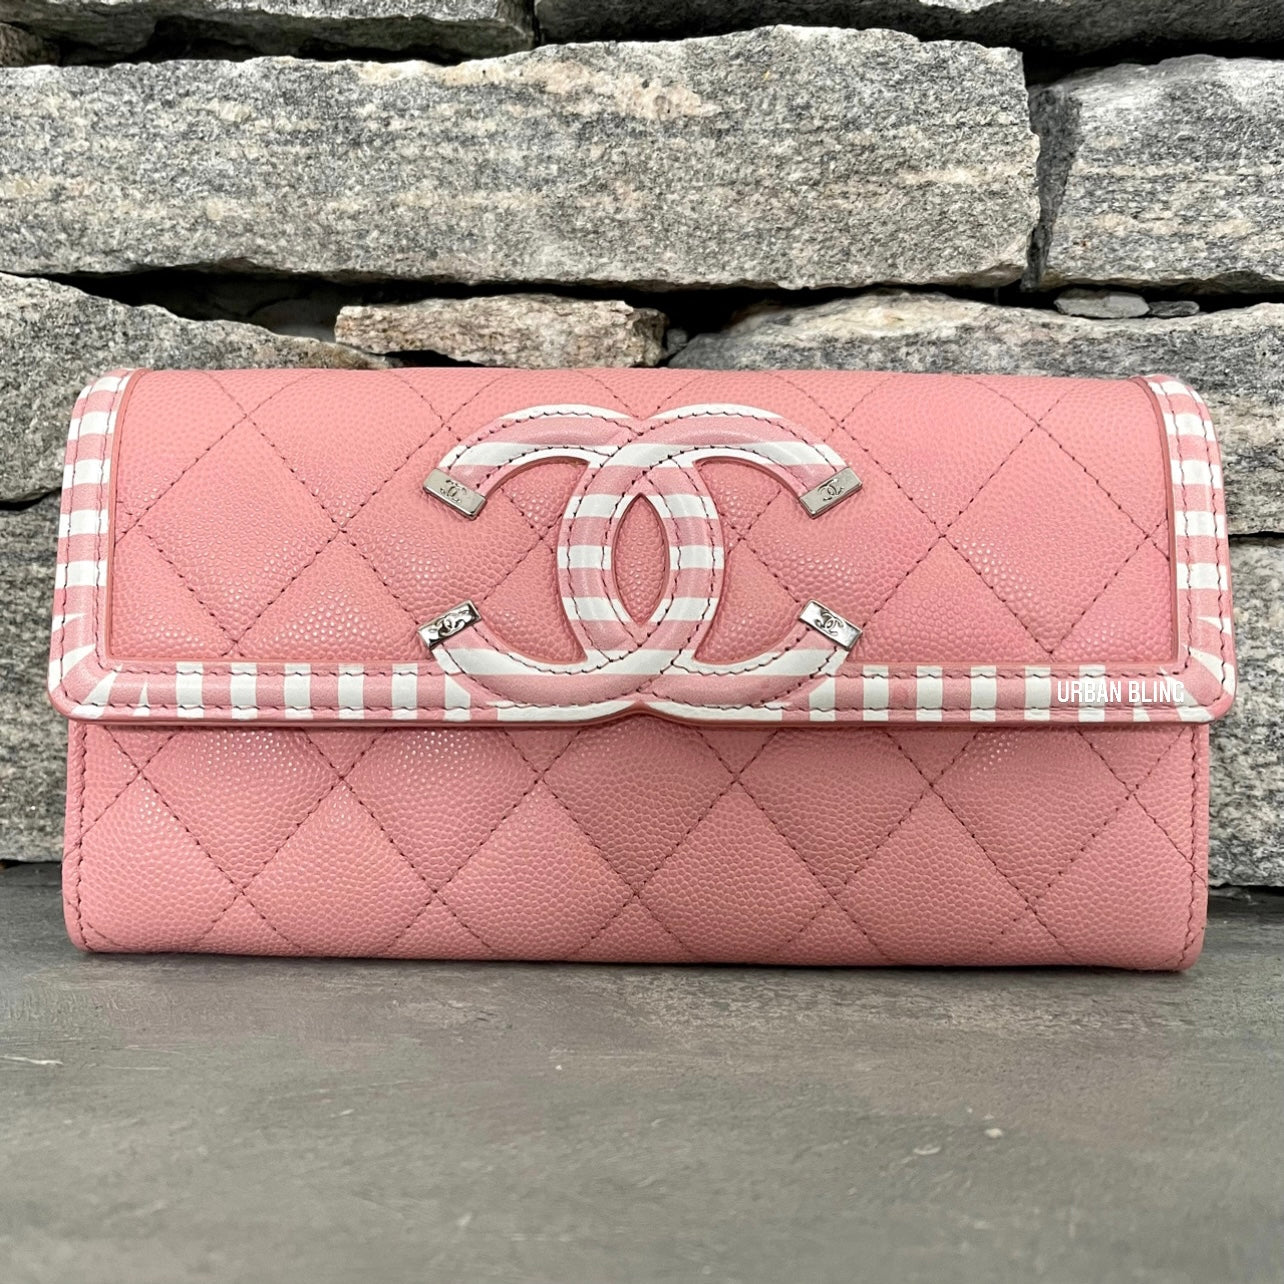 Chanel Pink Caviar Button Logo Wallet on Chain, 2012-2013 (Very Good), Pink/Silver Womens Handbag